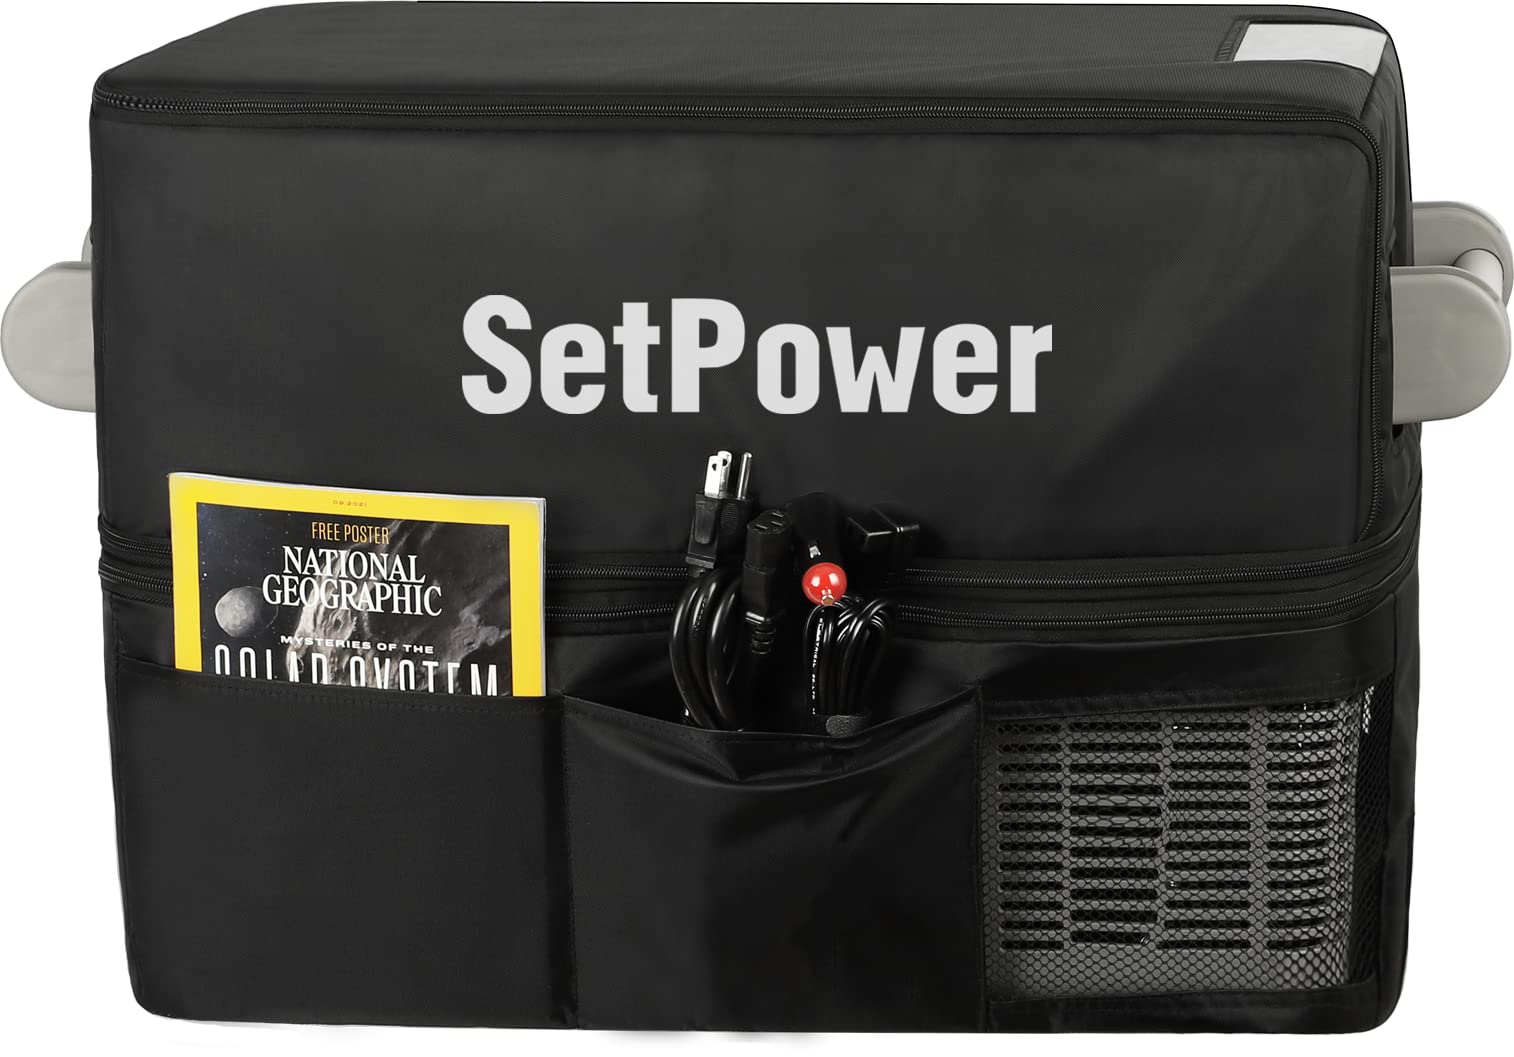 Setpower Insulated Protective Cover for AJ40 or AJ50 Portable Refrigerator Freezer, suitable for AJ40 AJ50 Both, Flexible Model